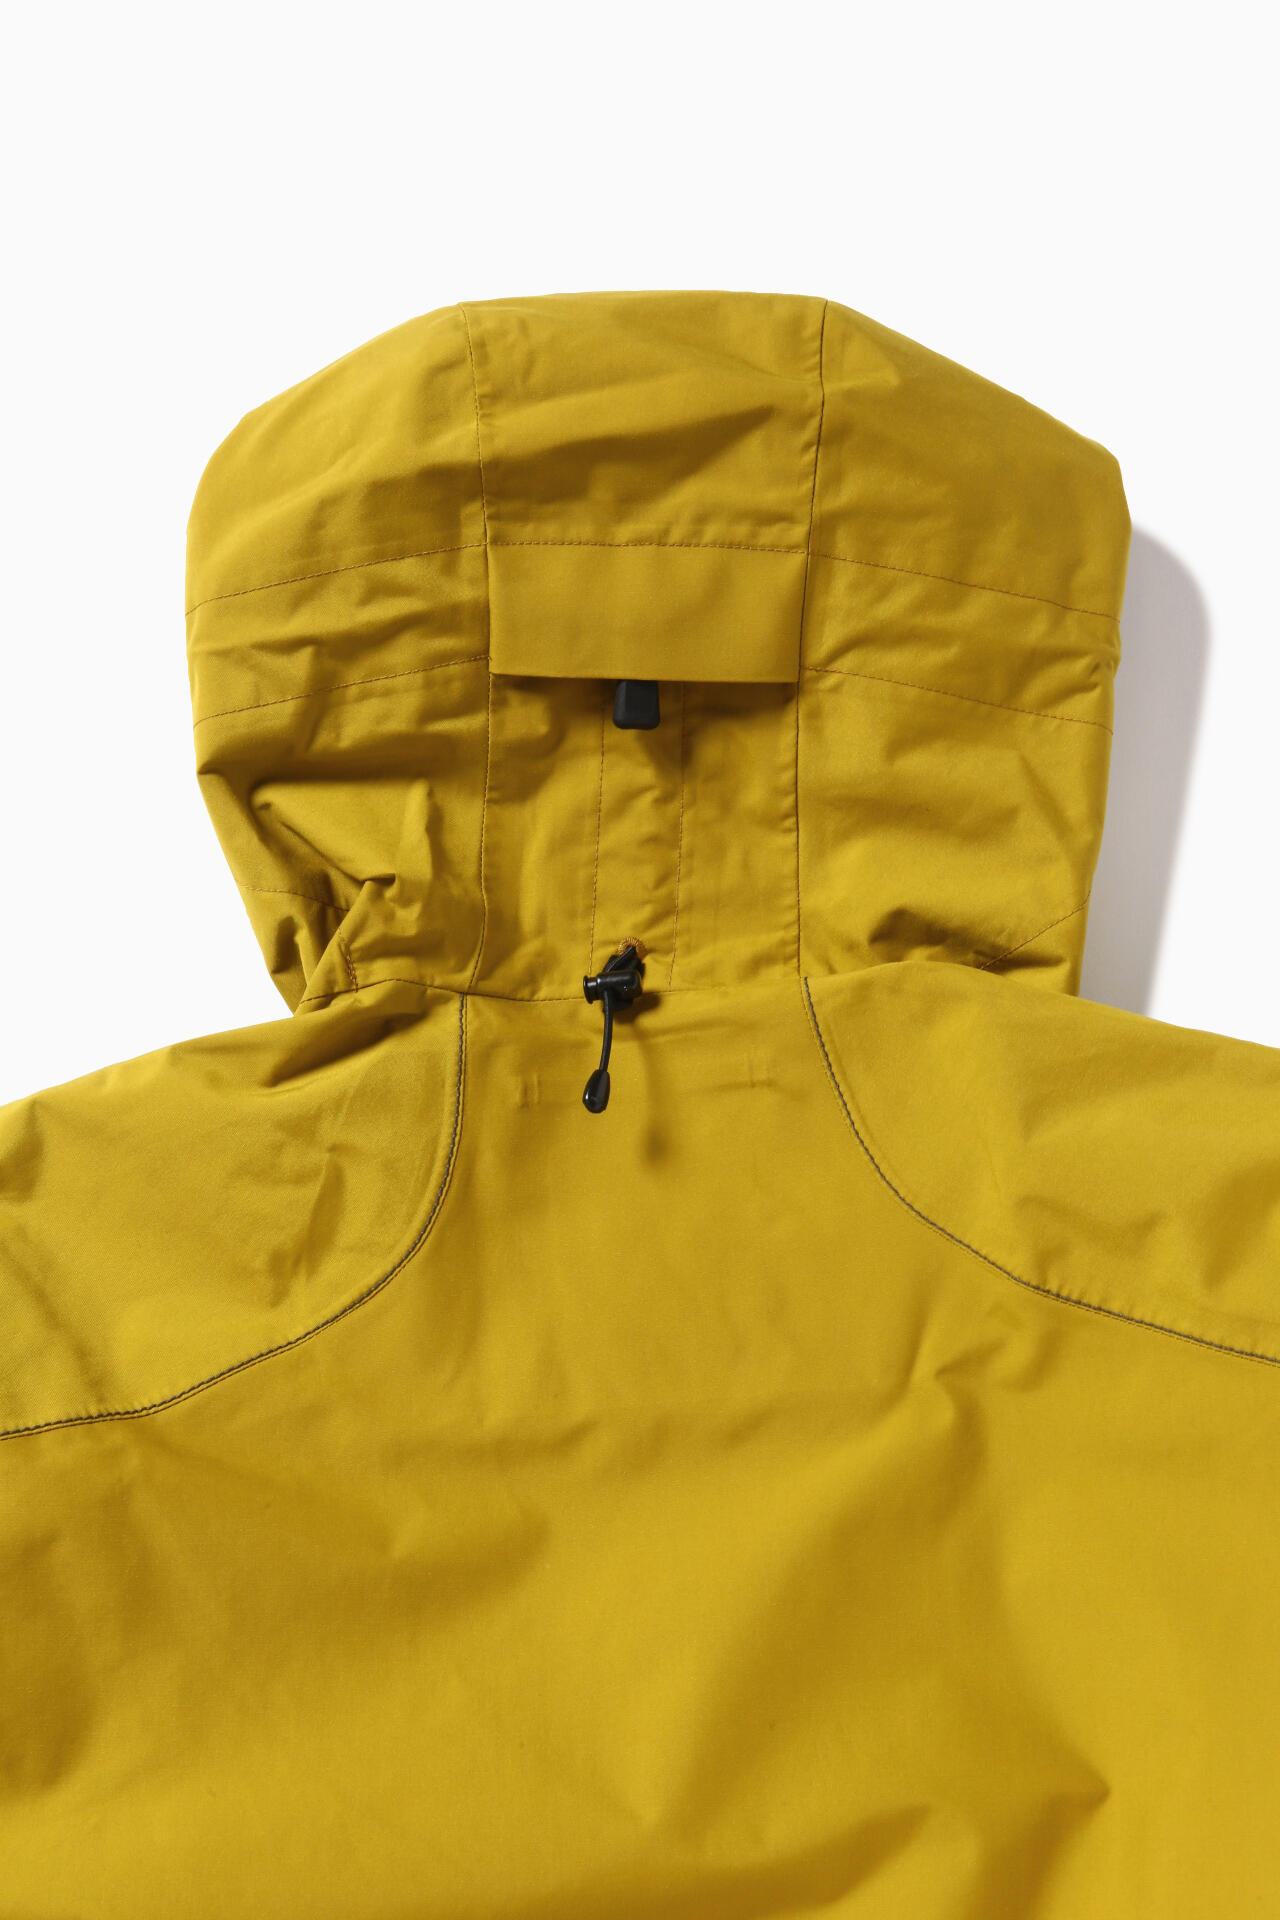 2.5L hiker rain jacket | outerwear | and wander ONLINE STORE